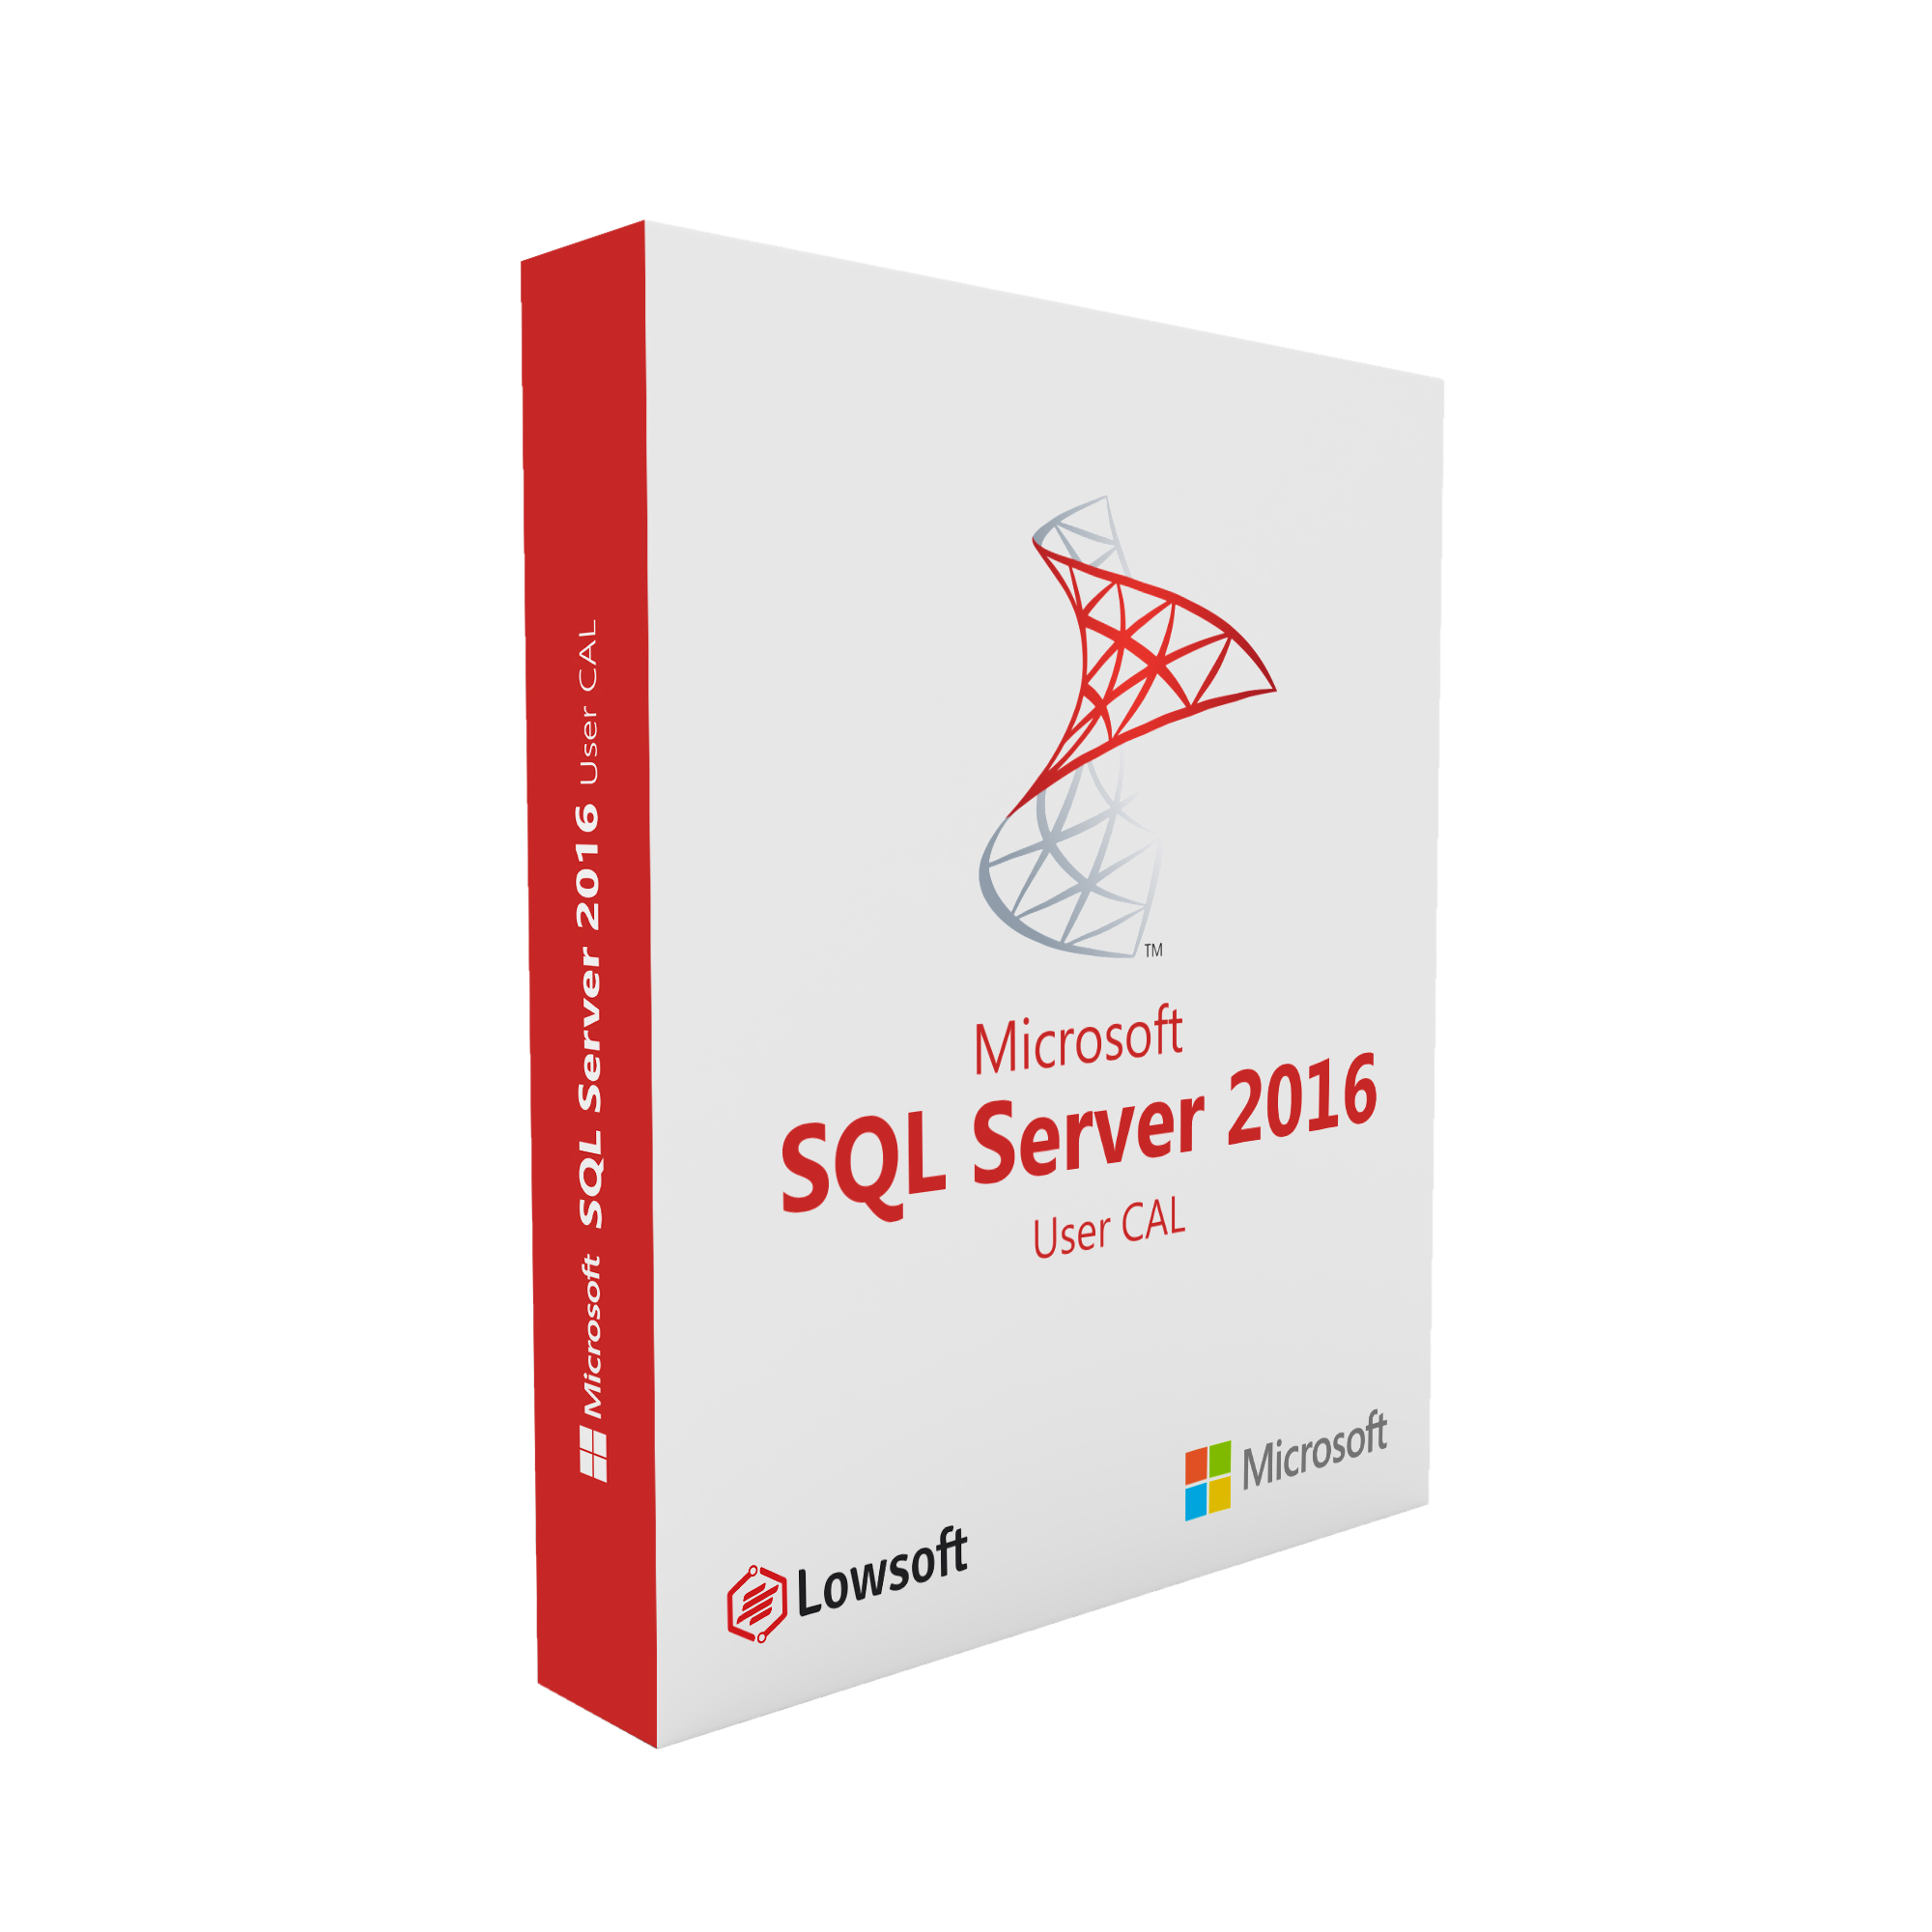 SQL Server 2016 User CAL